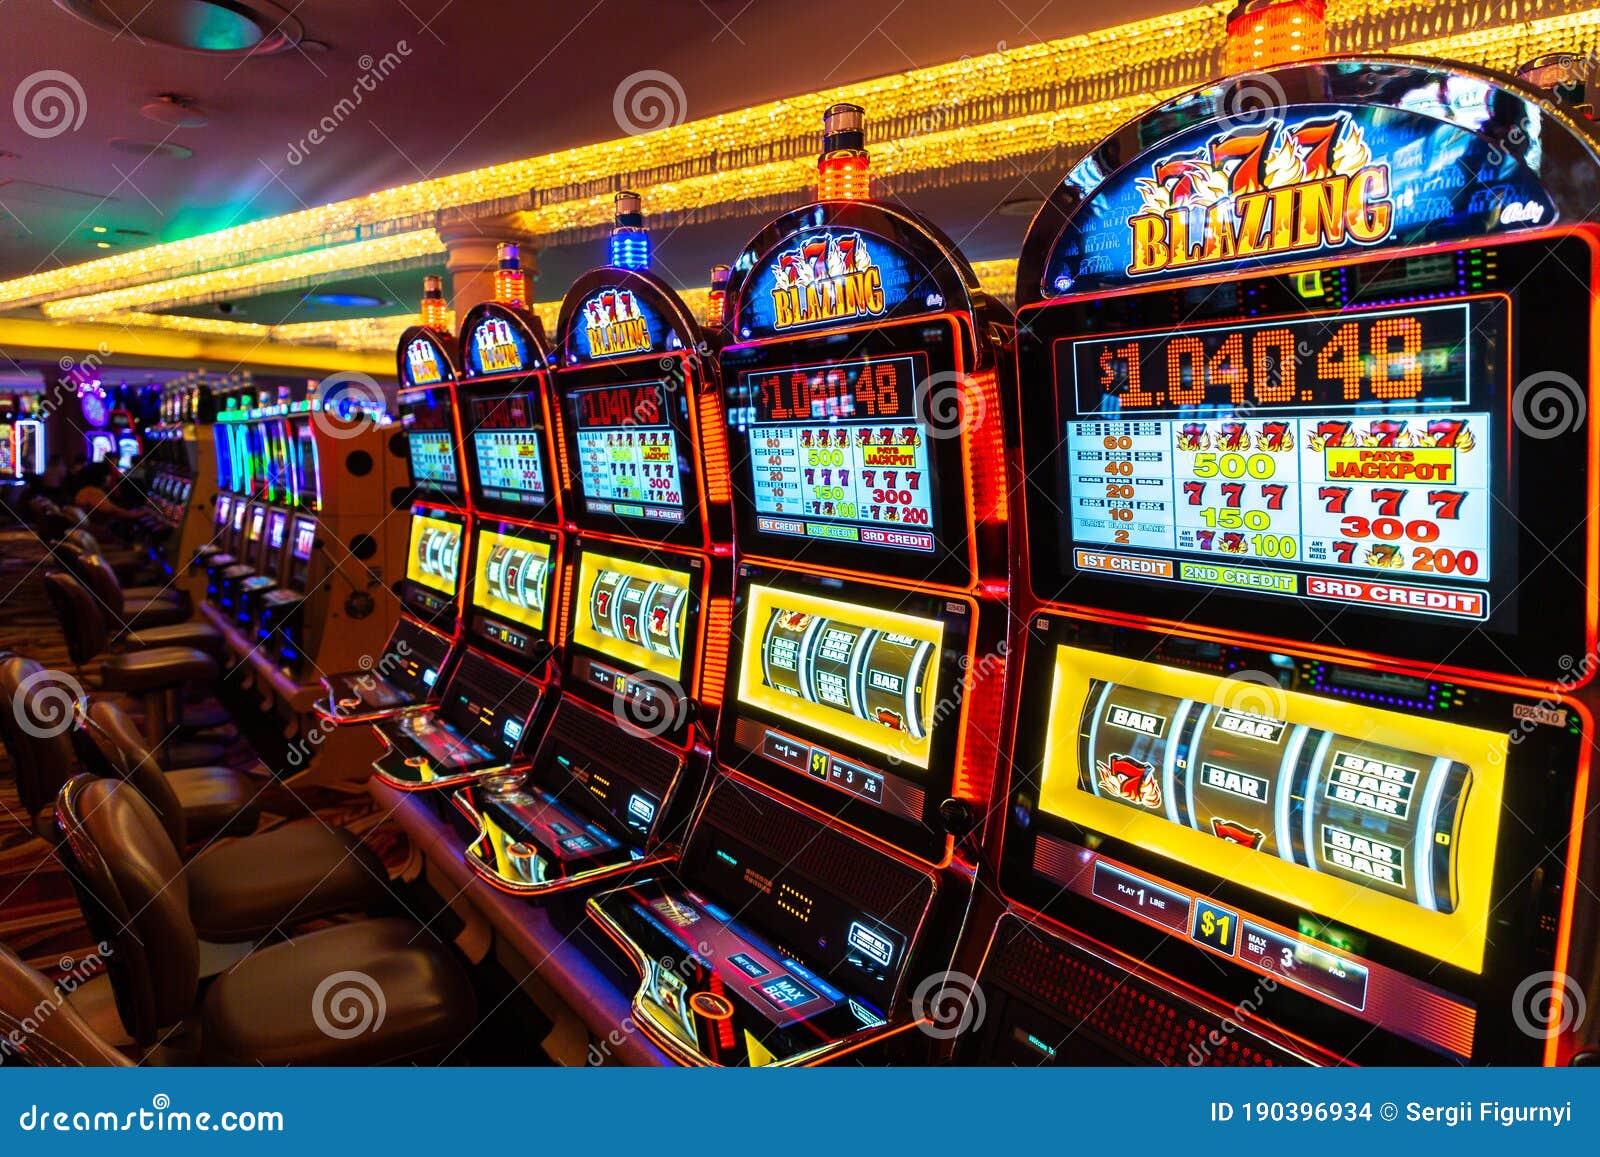 Playing slot-machines - Las Vegas hotel accommodations